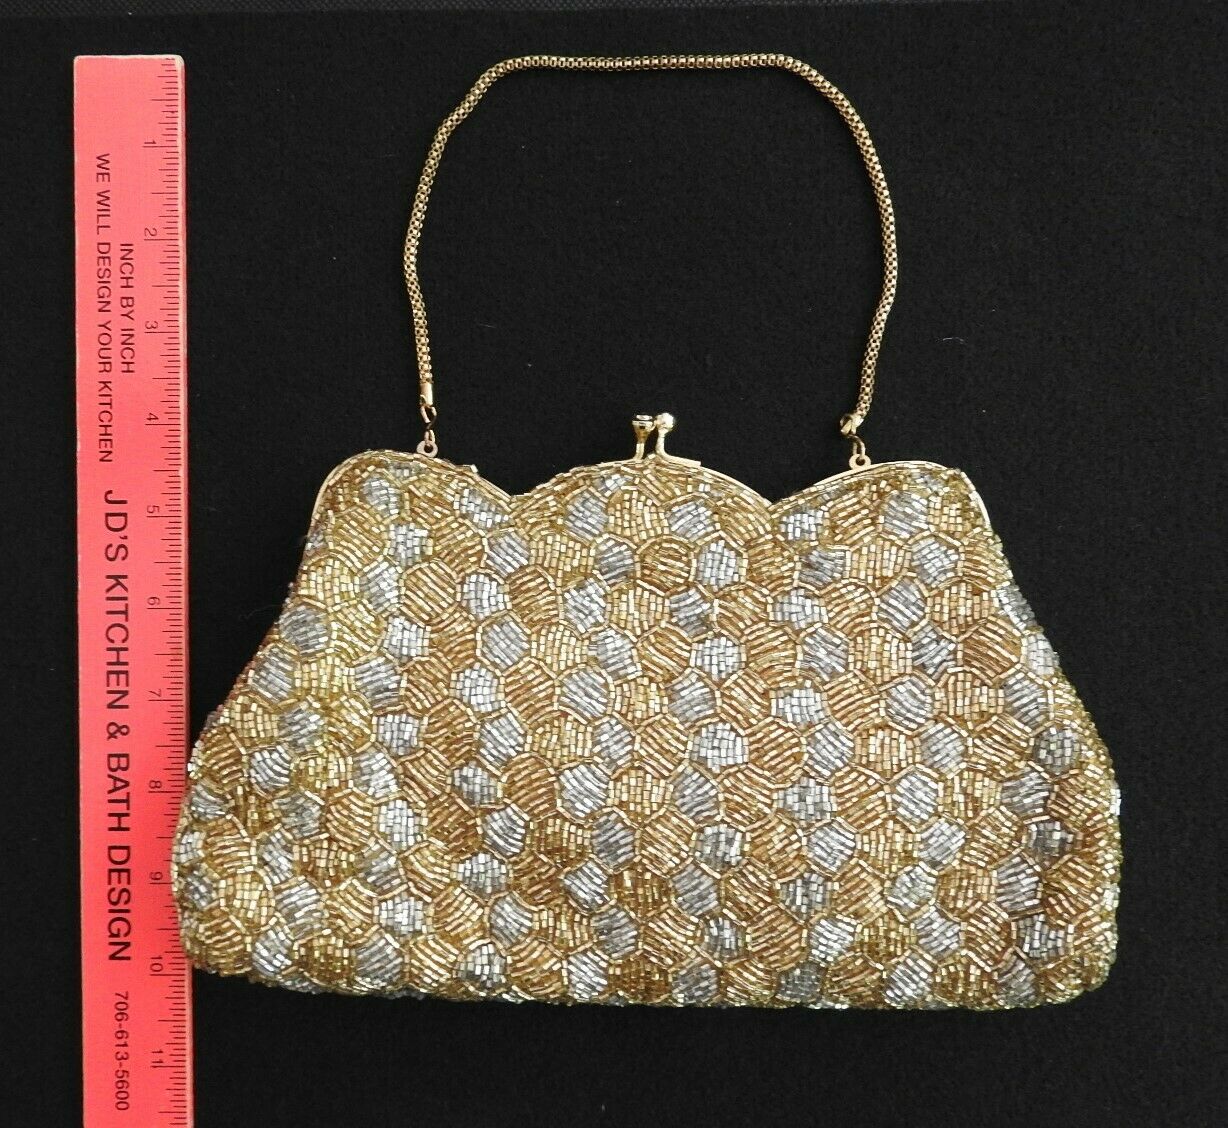 Exquisite Silver & Gold Beaded Evening Bag Purse Clutch; Satin Lining, Handmade